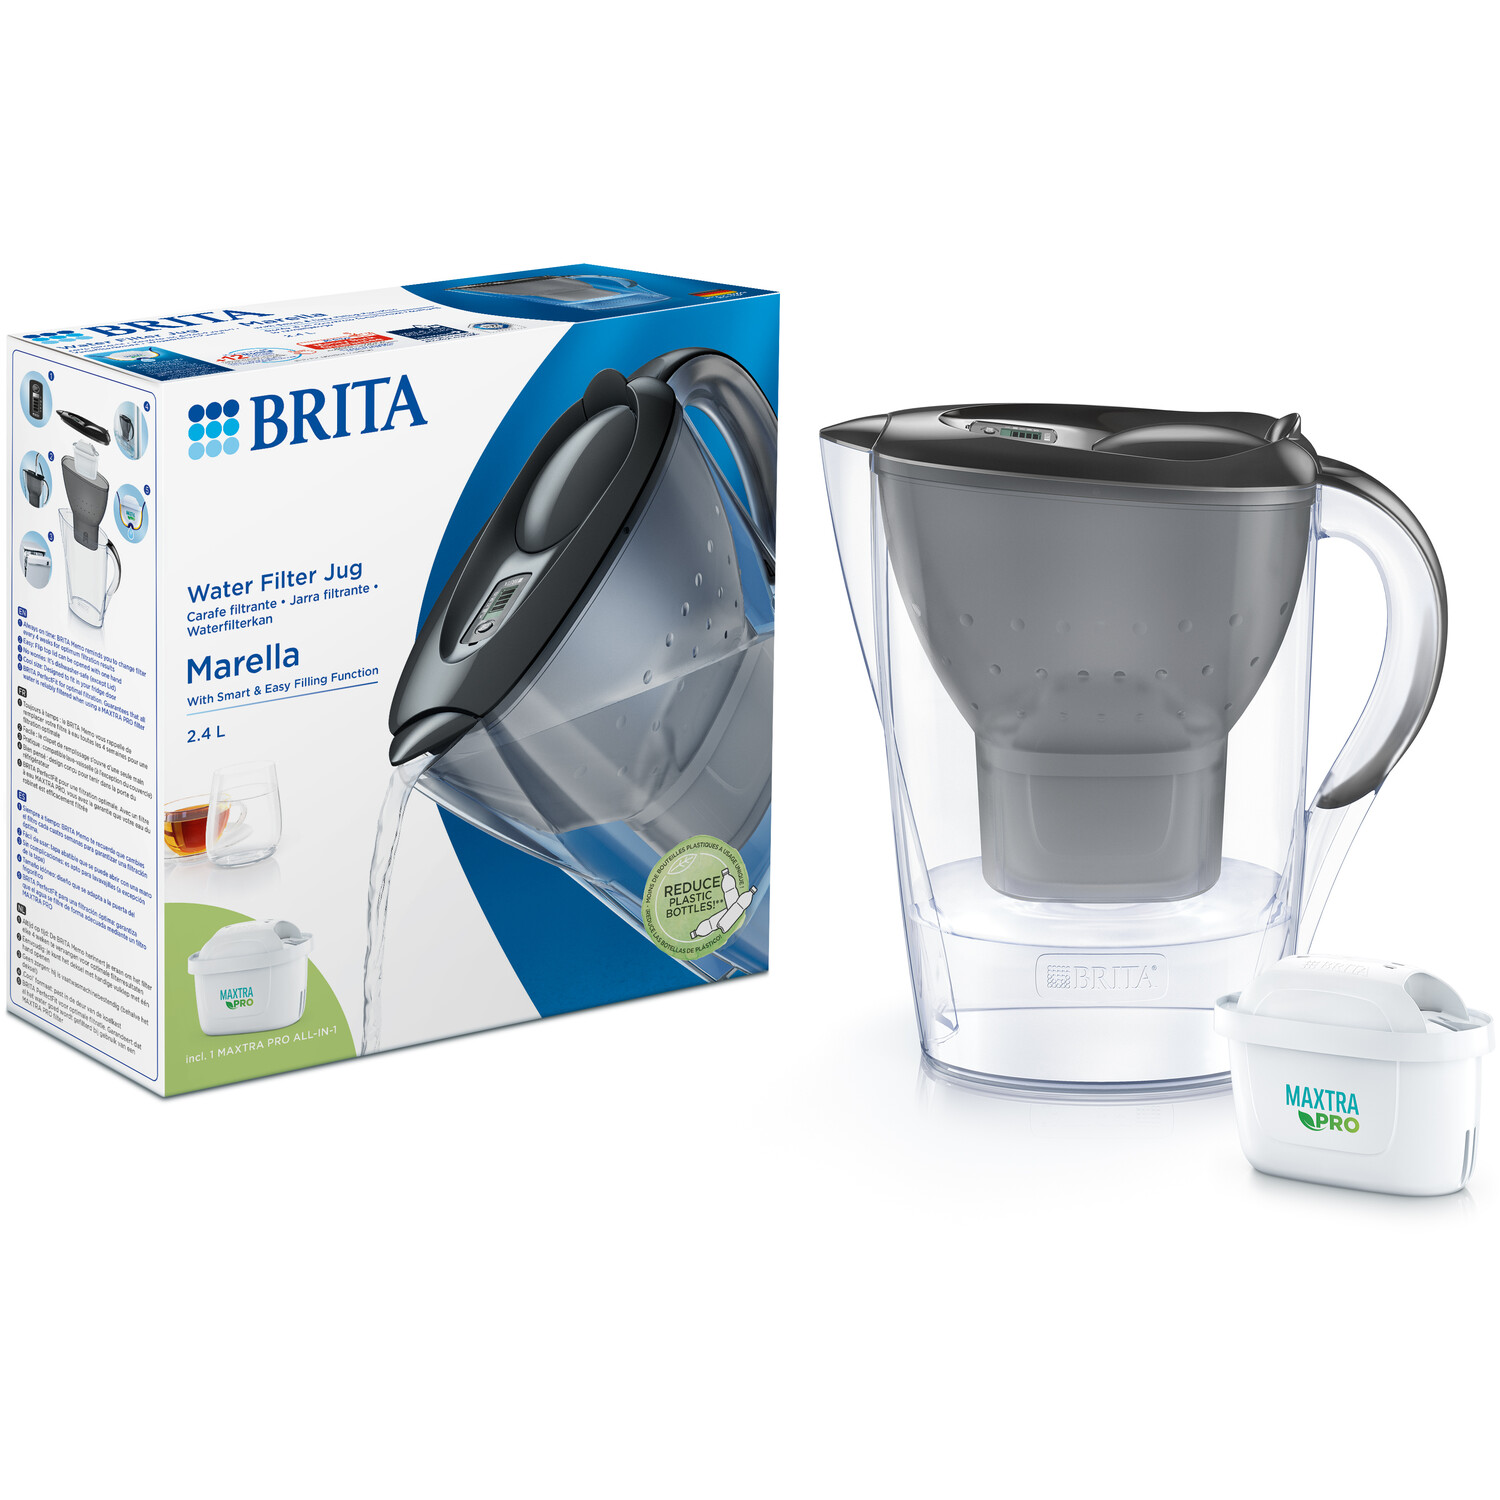 BRITA Marella 2.4L Cool Graphite Water Filter Jug Image 1